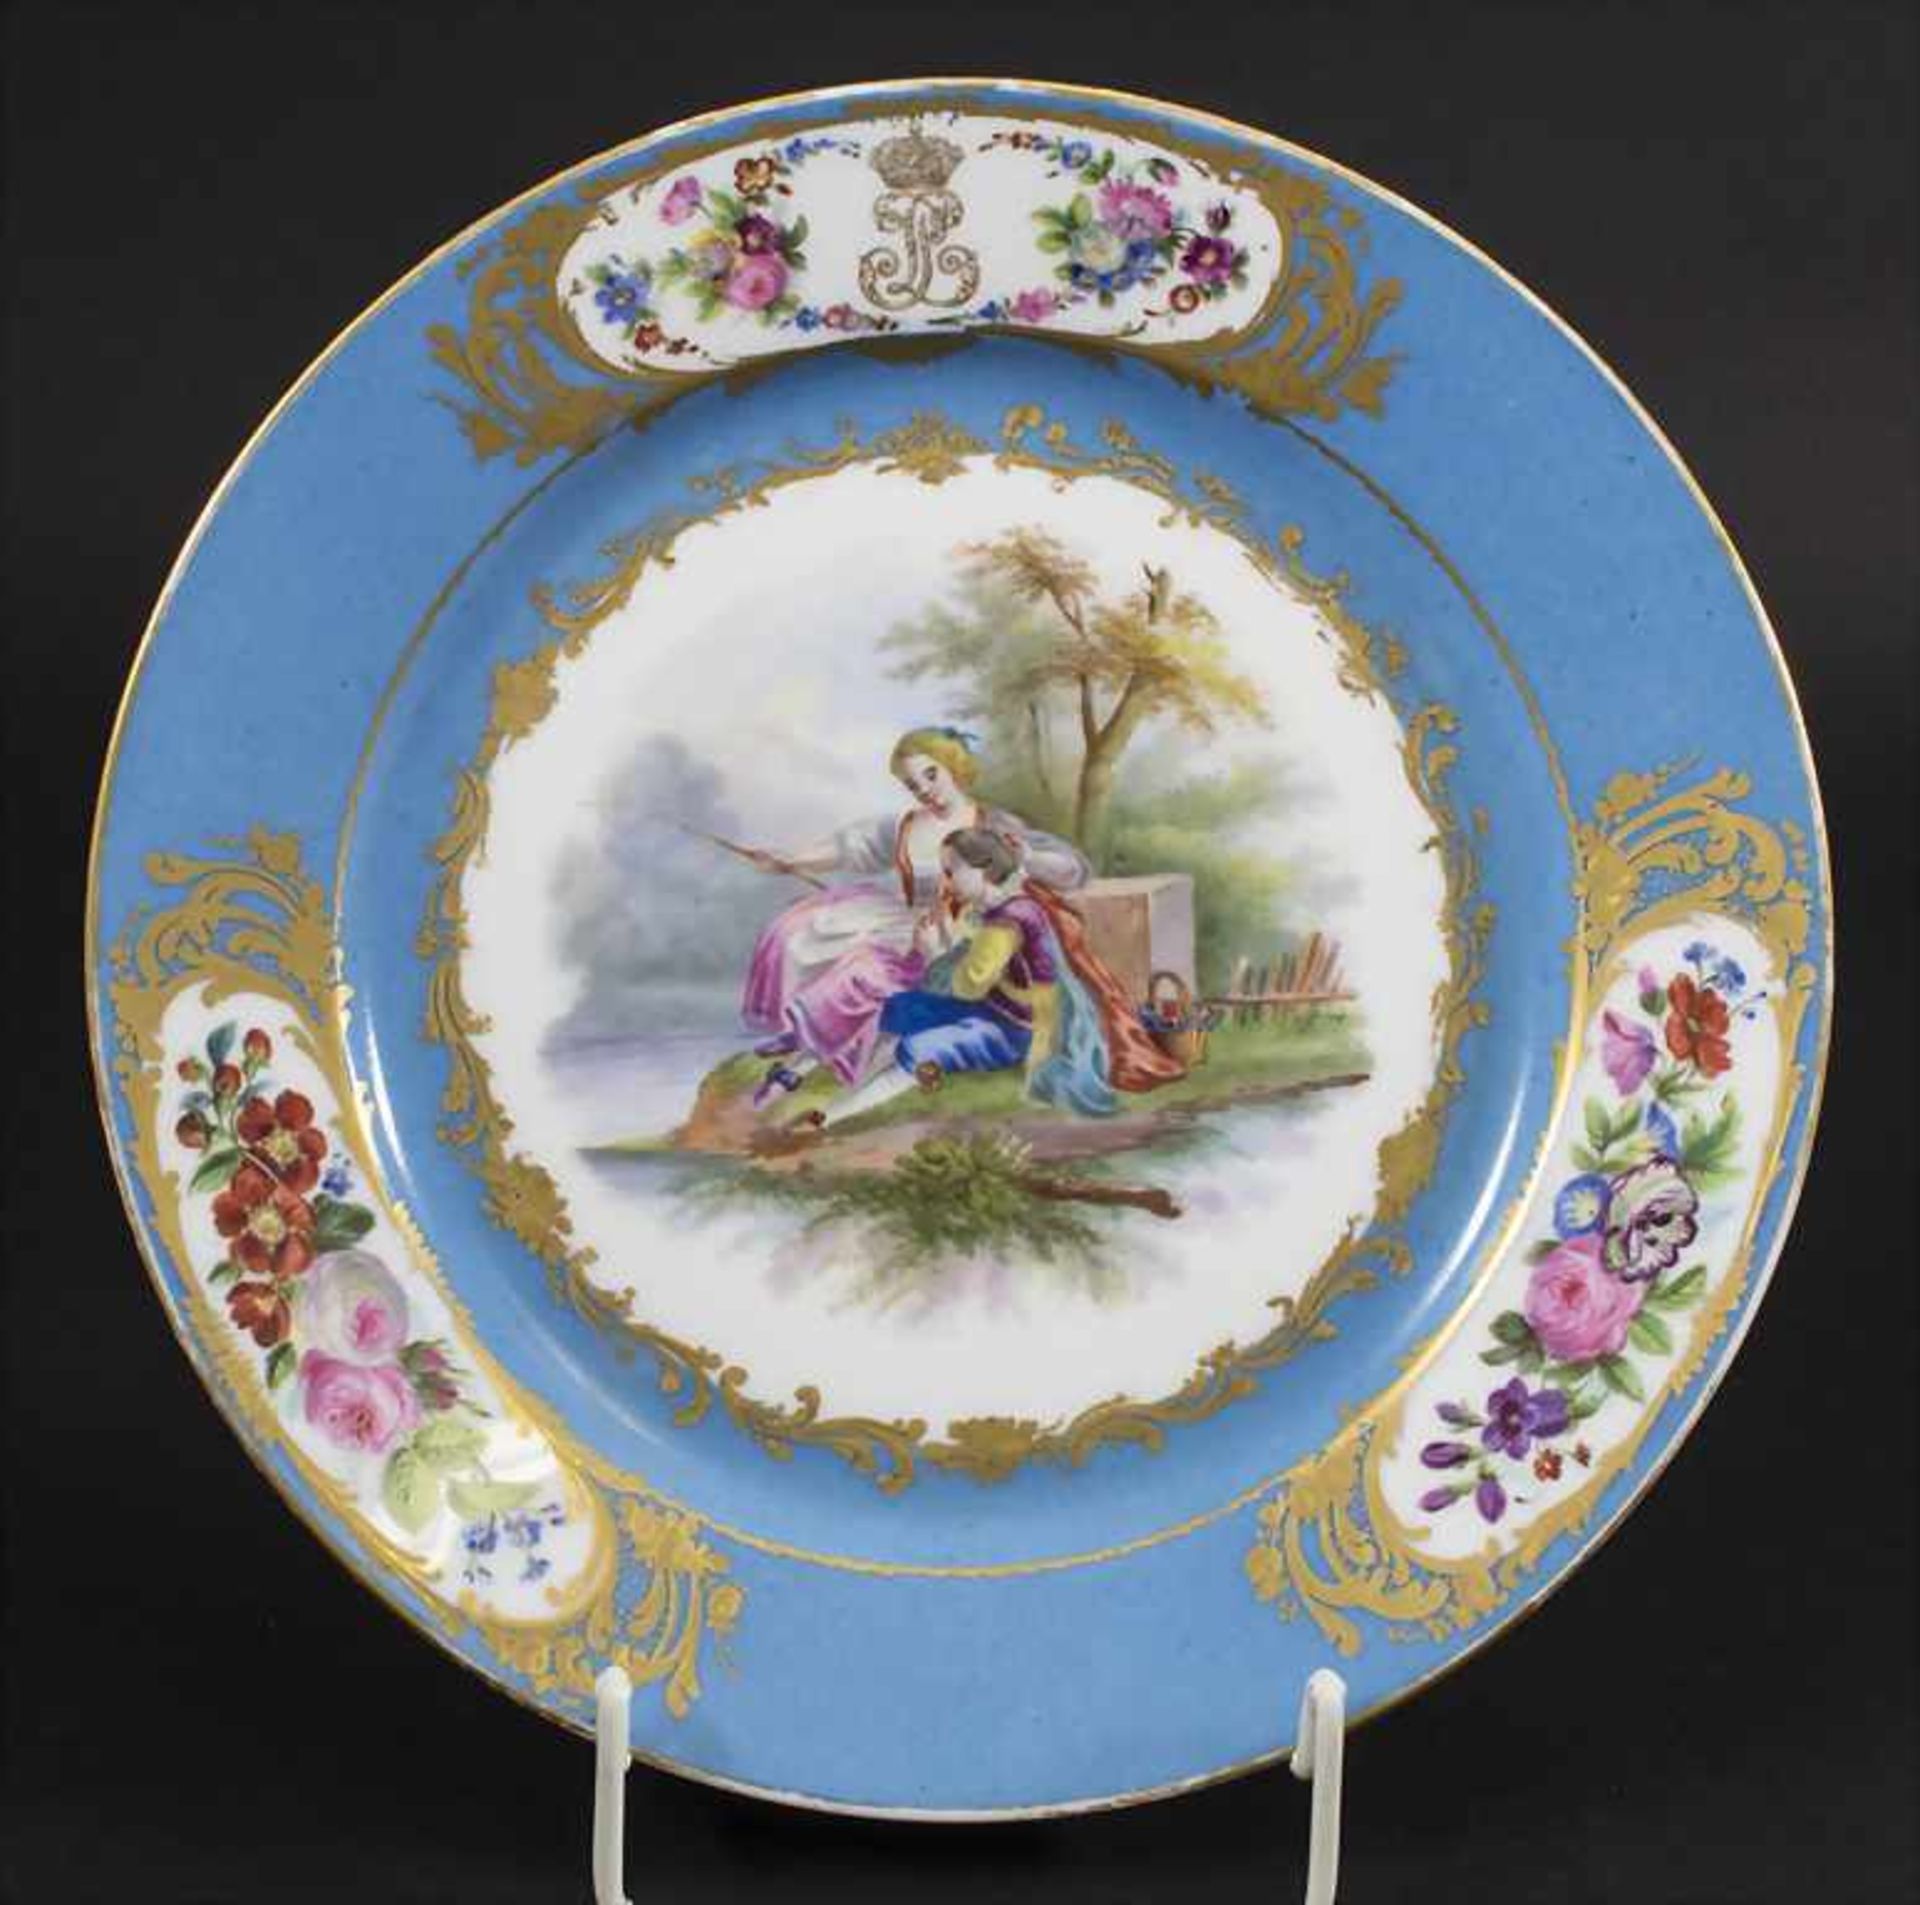 'Bleu Celeste' Teller mit galanter Szene und Königsmonogramm / A 'Bleu Celeste' plate with a Watteau